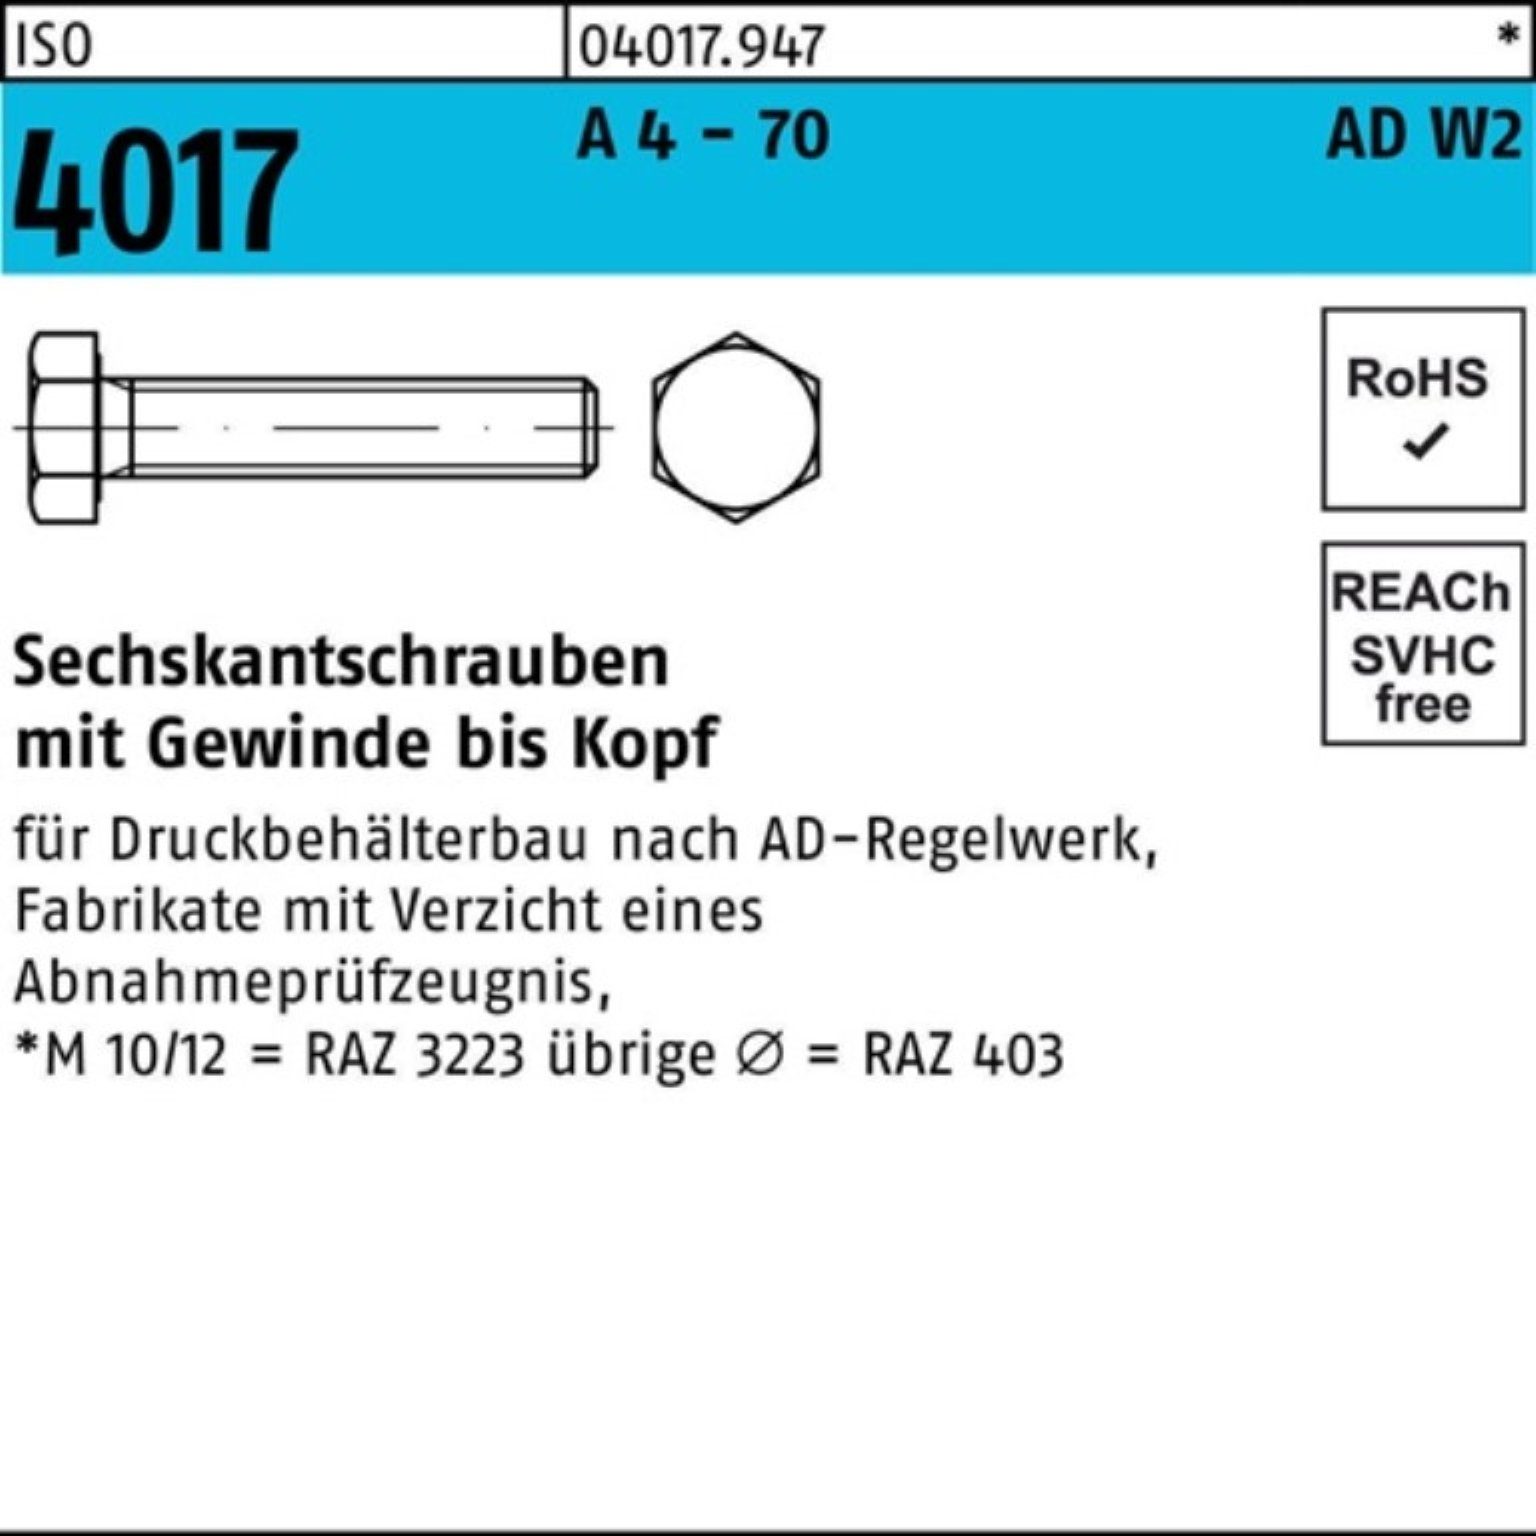 Sechskantschraube Sechskantschraube M6x - ISO 200er 200 70 Bufab Pack AD-W2 4 8 VG 4017 Stü A